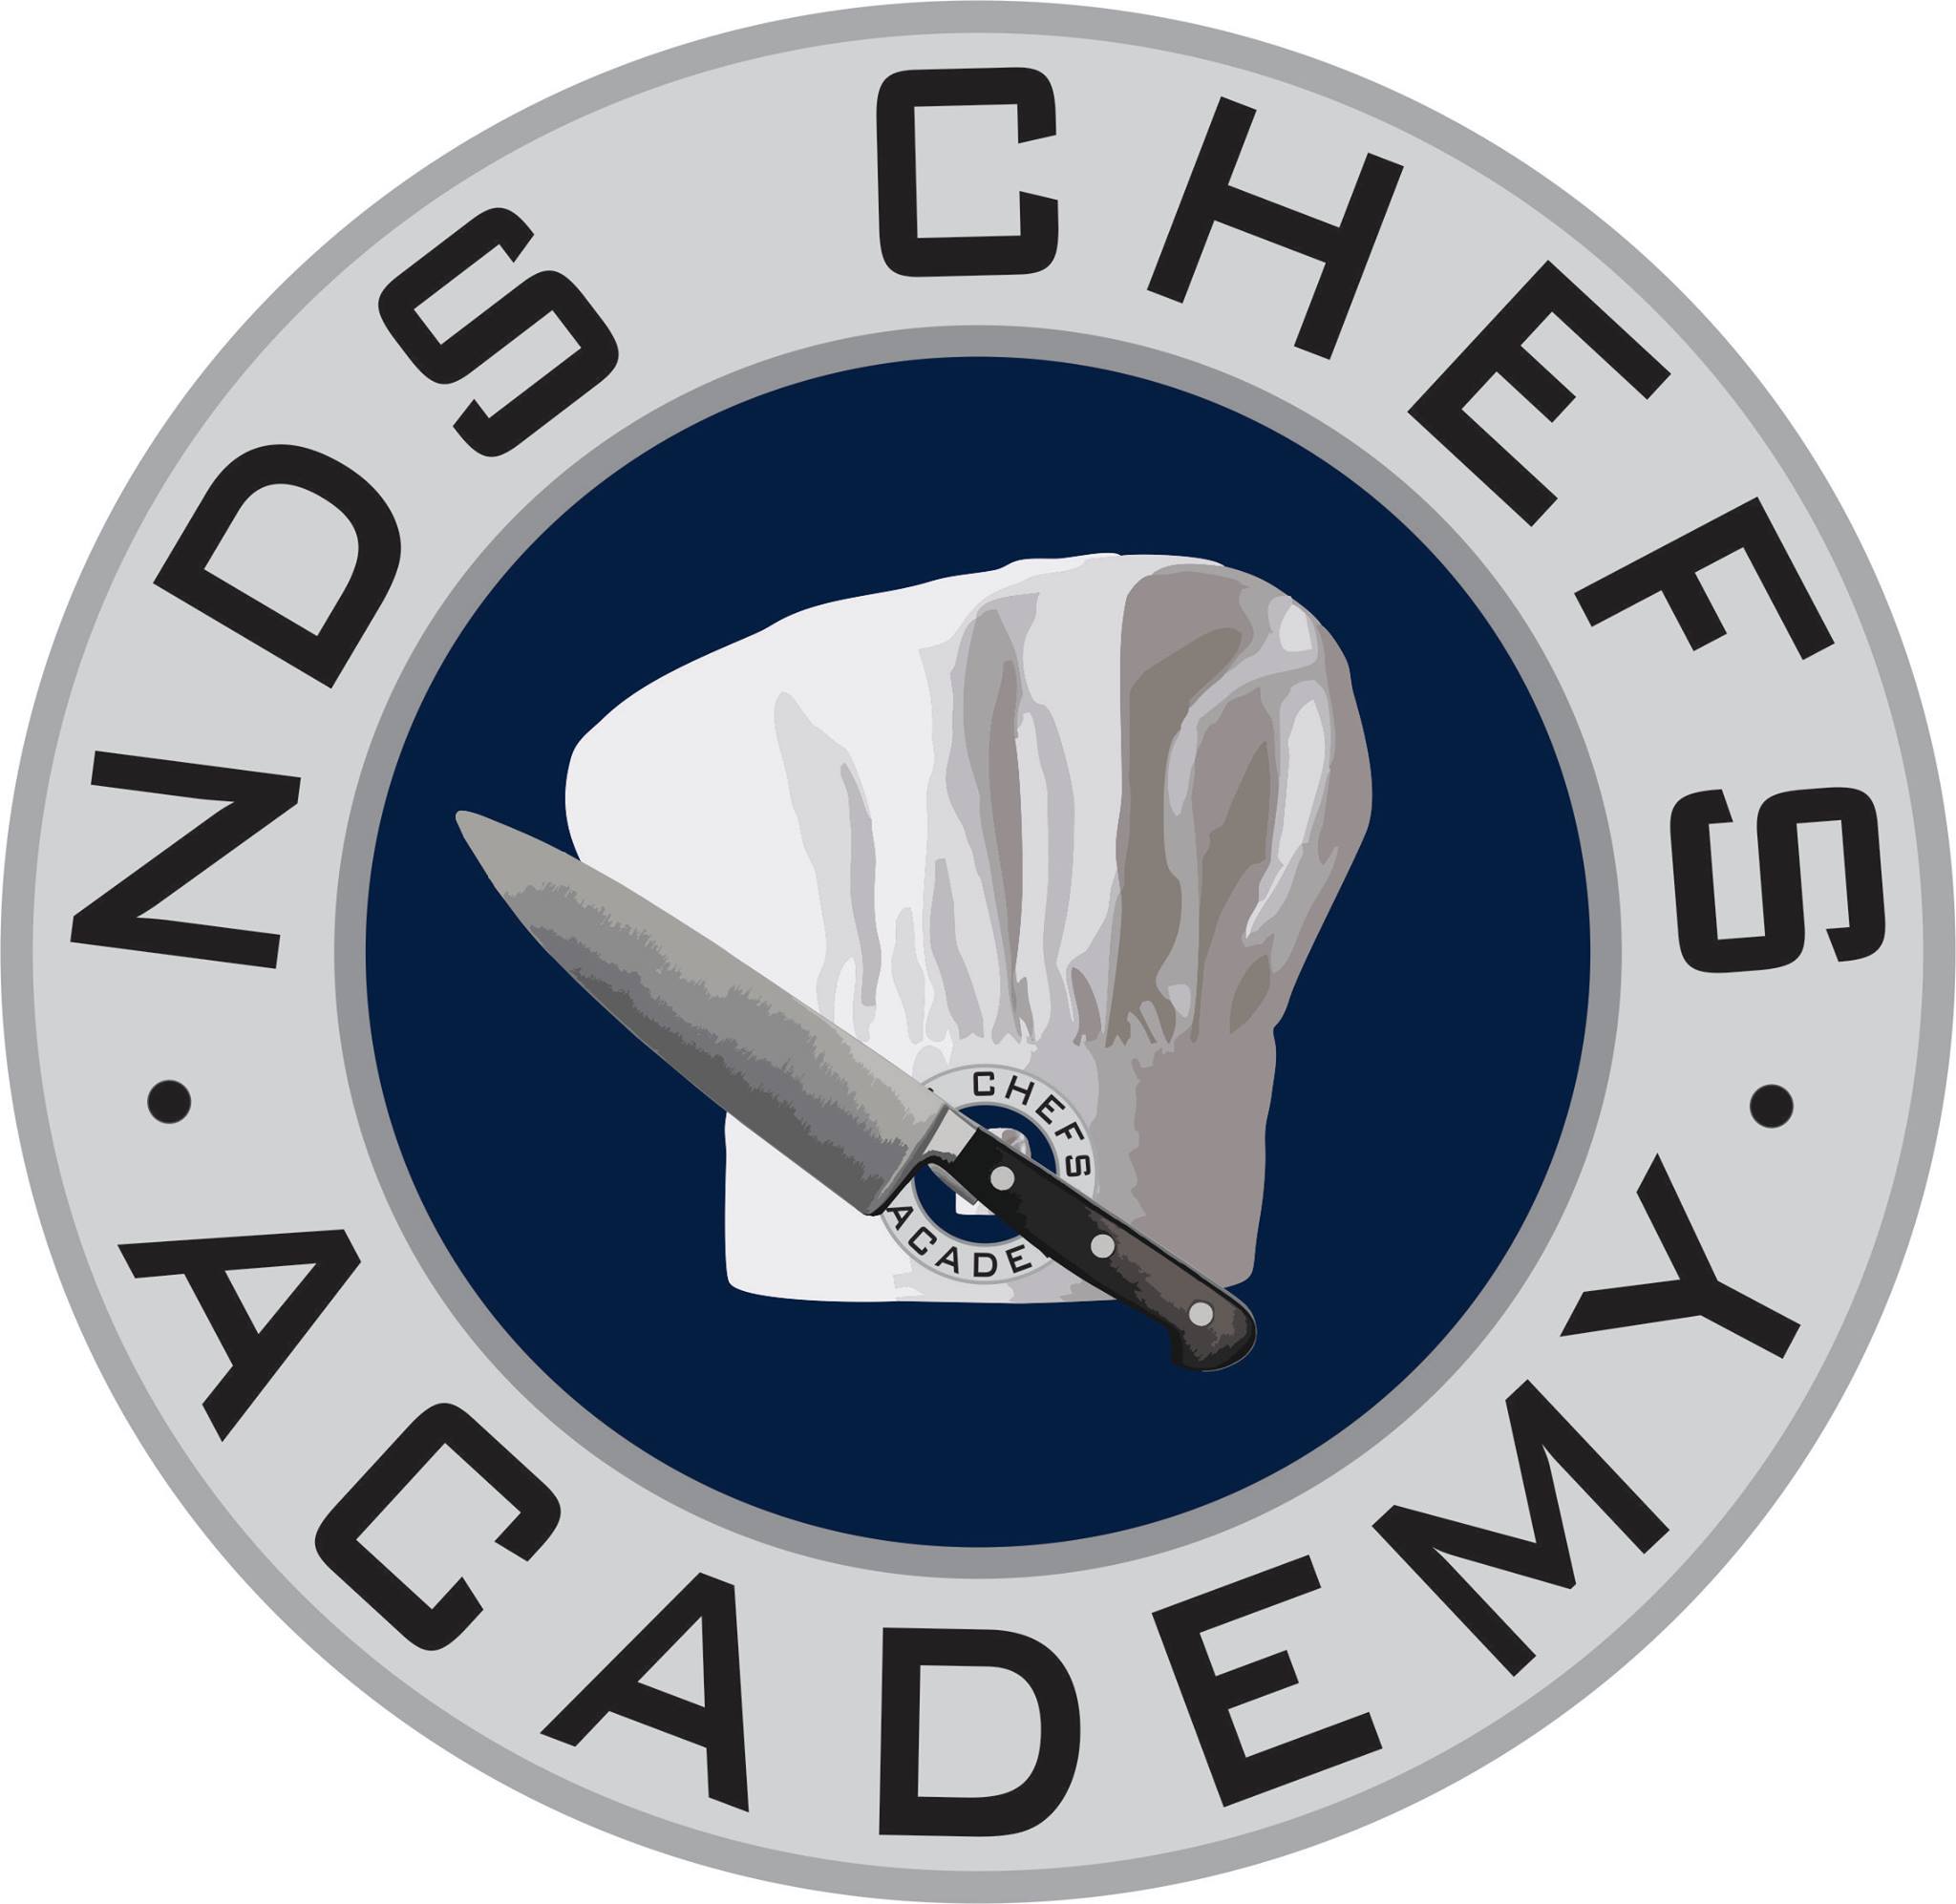 NDS Chefs Academy Logo